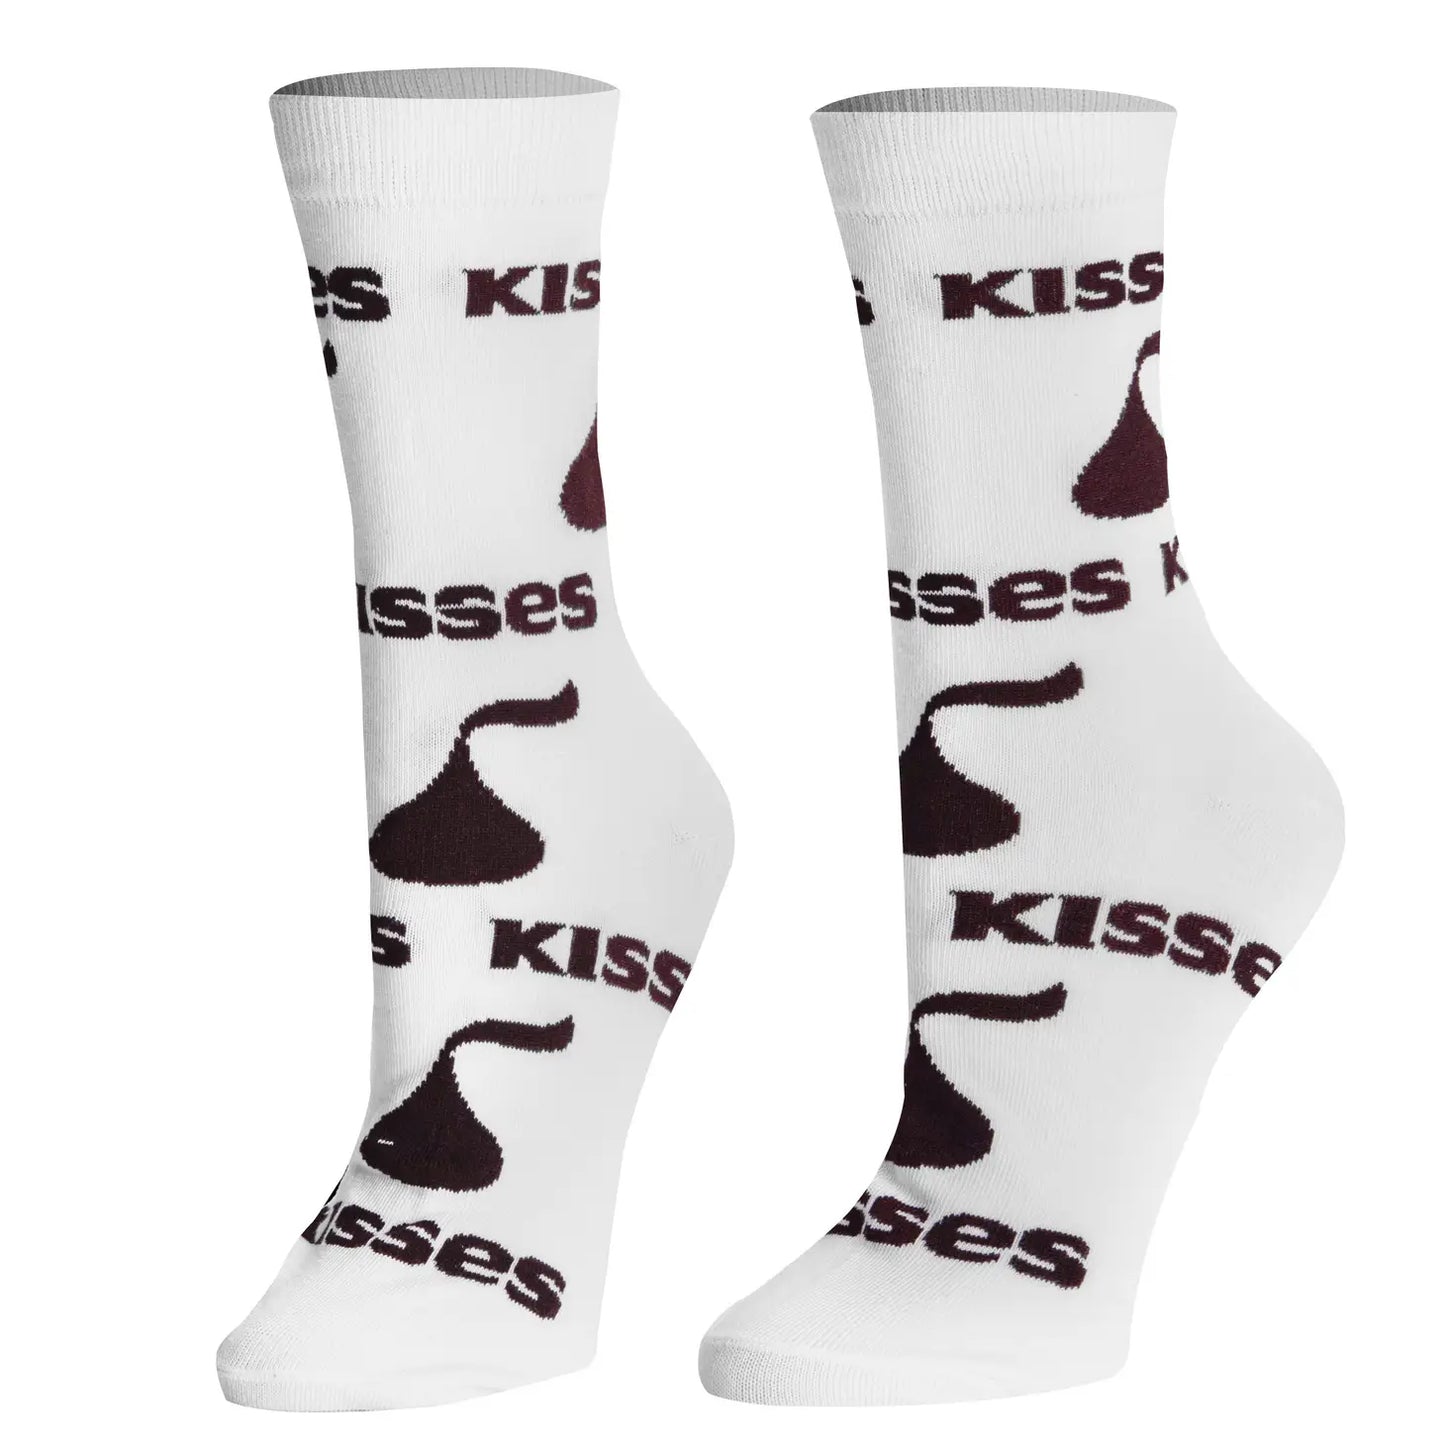 Socks - Small Crew - Hershey Kisses